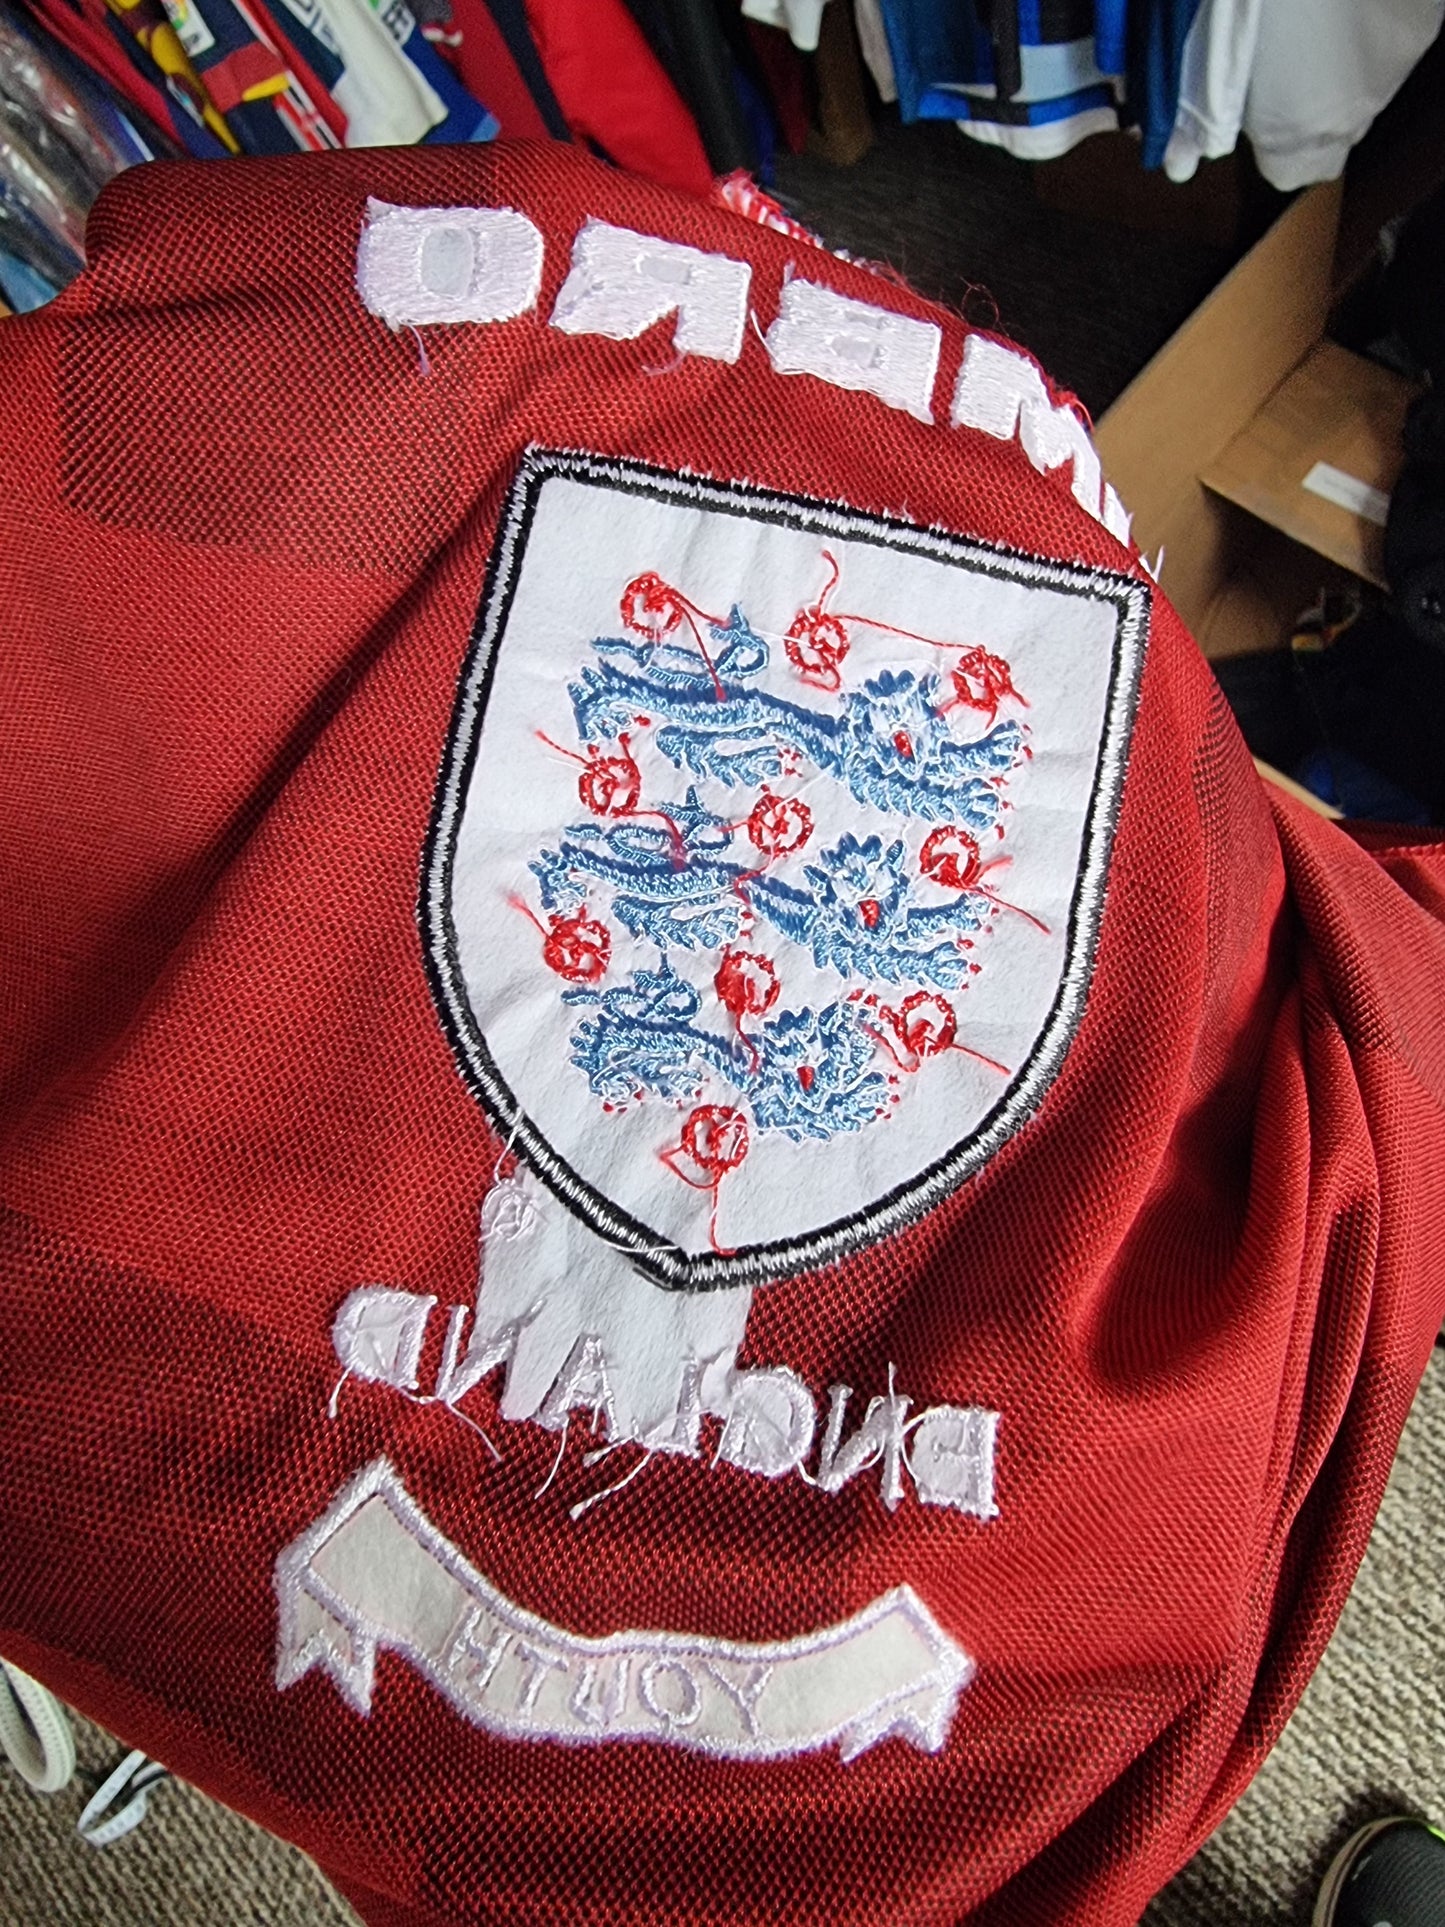 Umbro England 97/99 Match Issue Youth Away Shirt XL